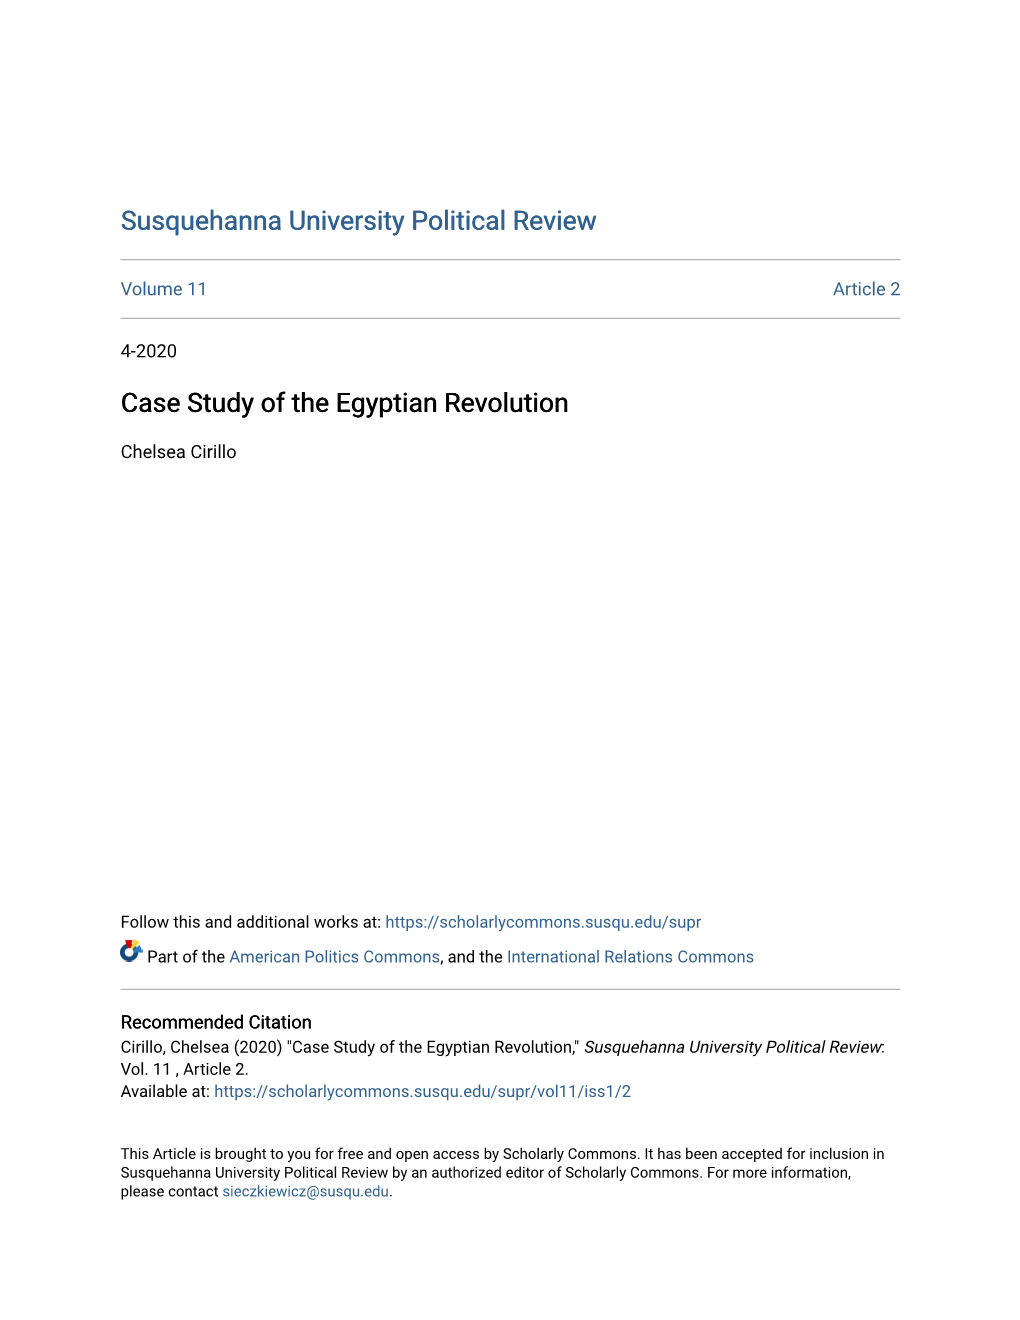 Case Study of the Egyptian Revolution